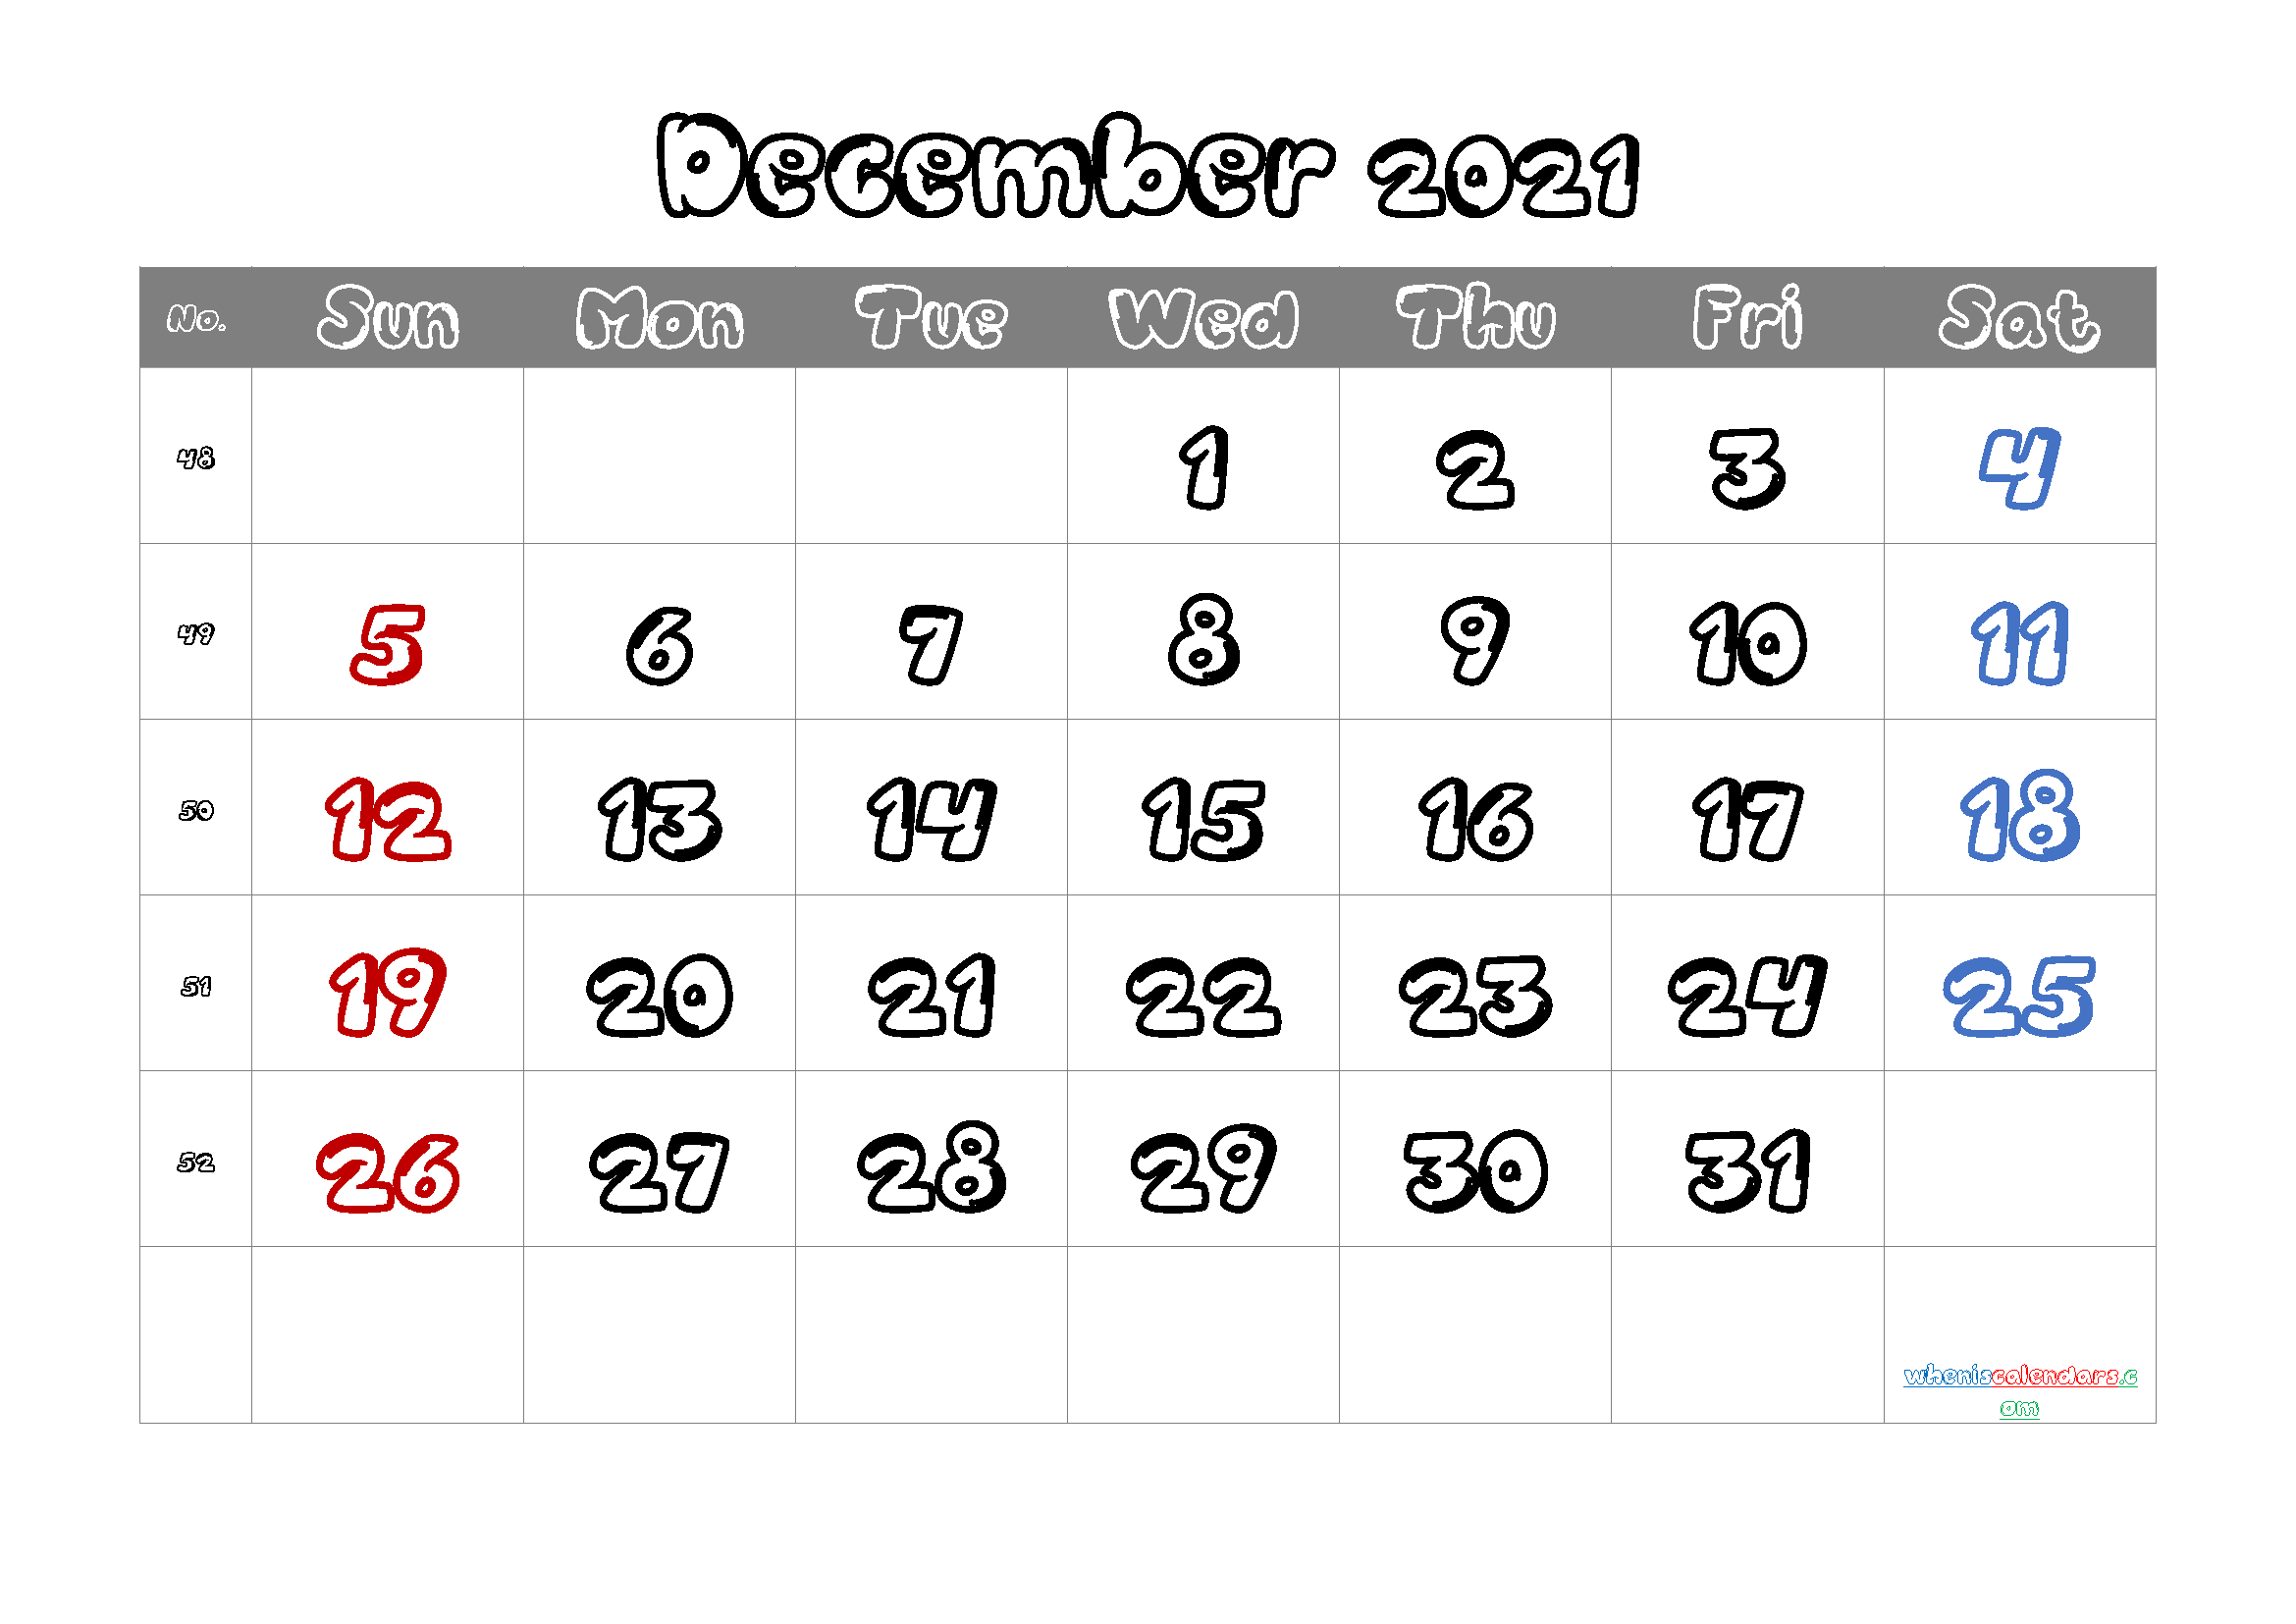 December 2021 Calendar Printable Free